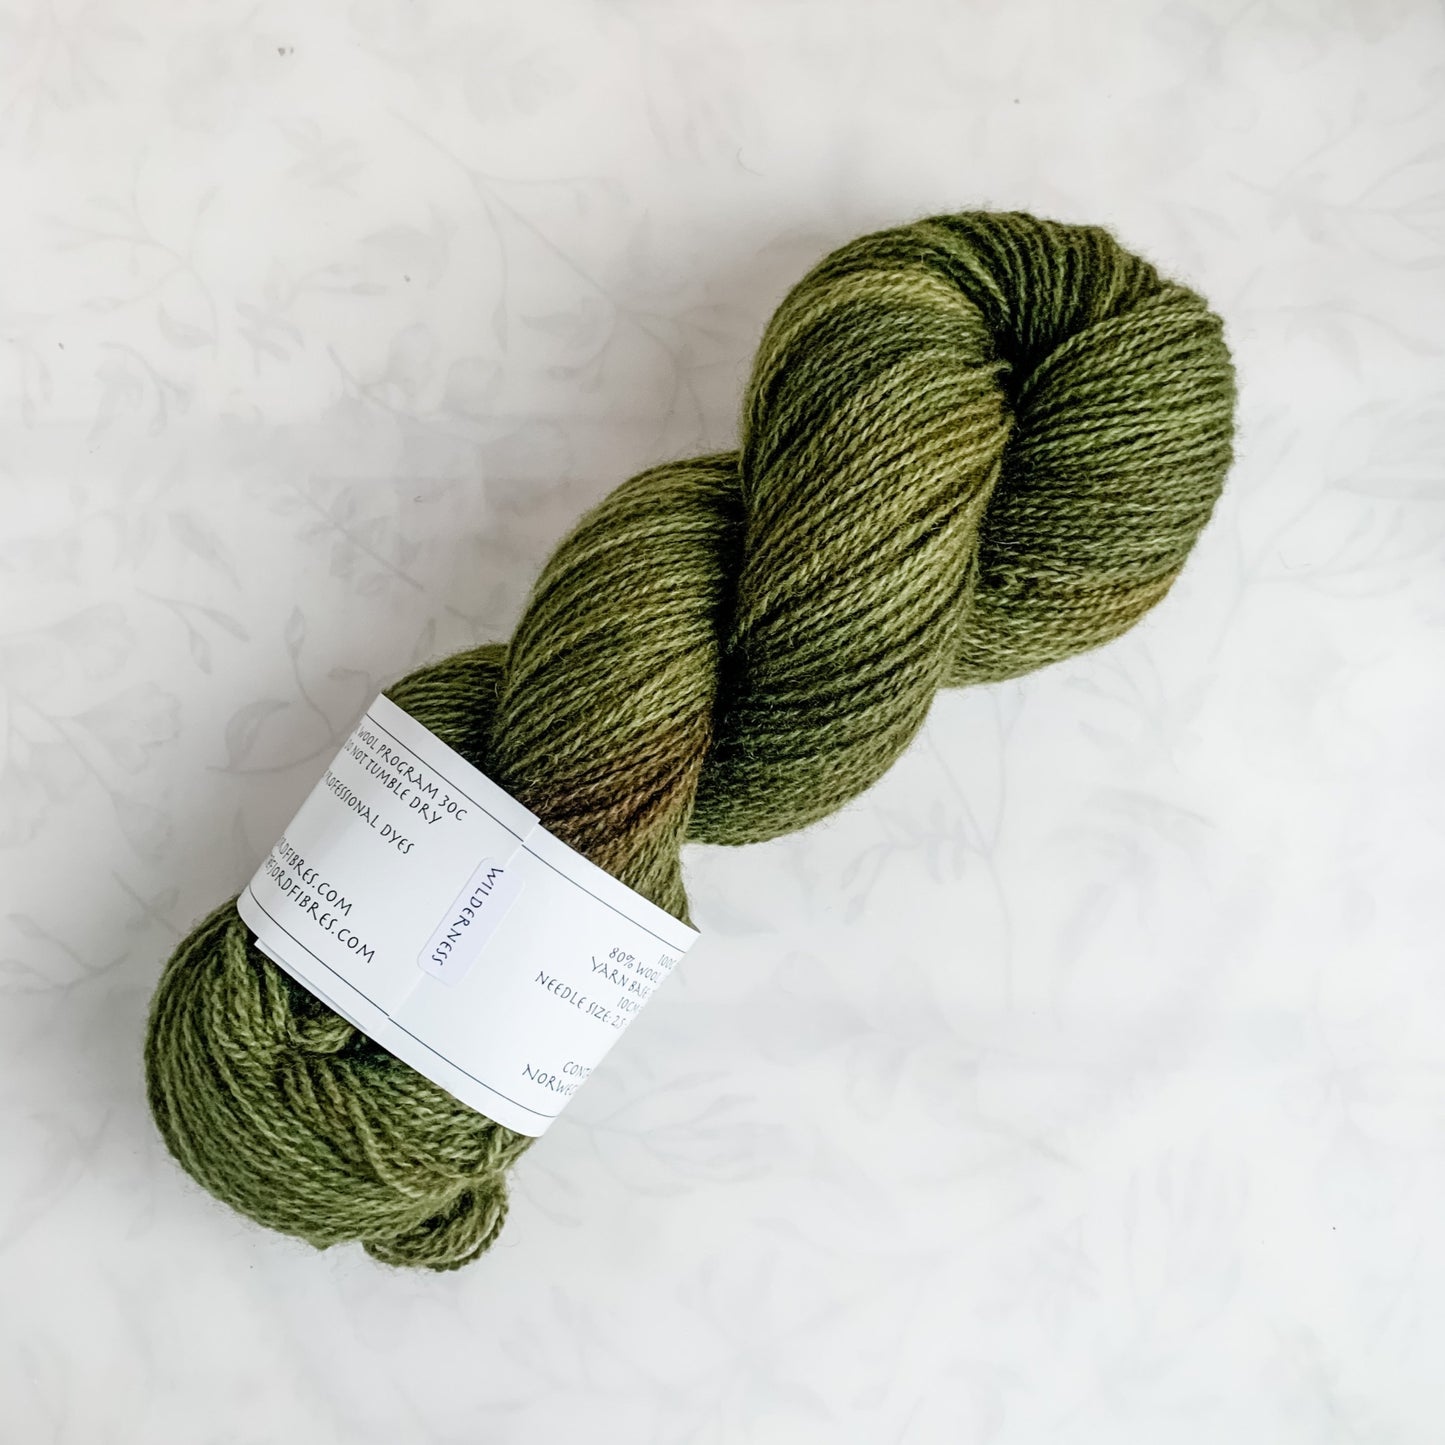 Wilderness - Trollfjord sock - Tonal Yarn - Hand dyed yarn